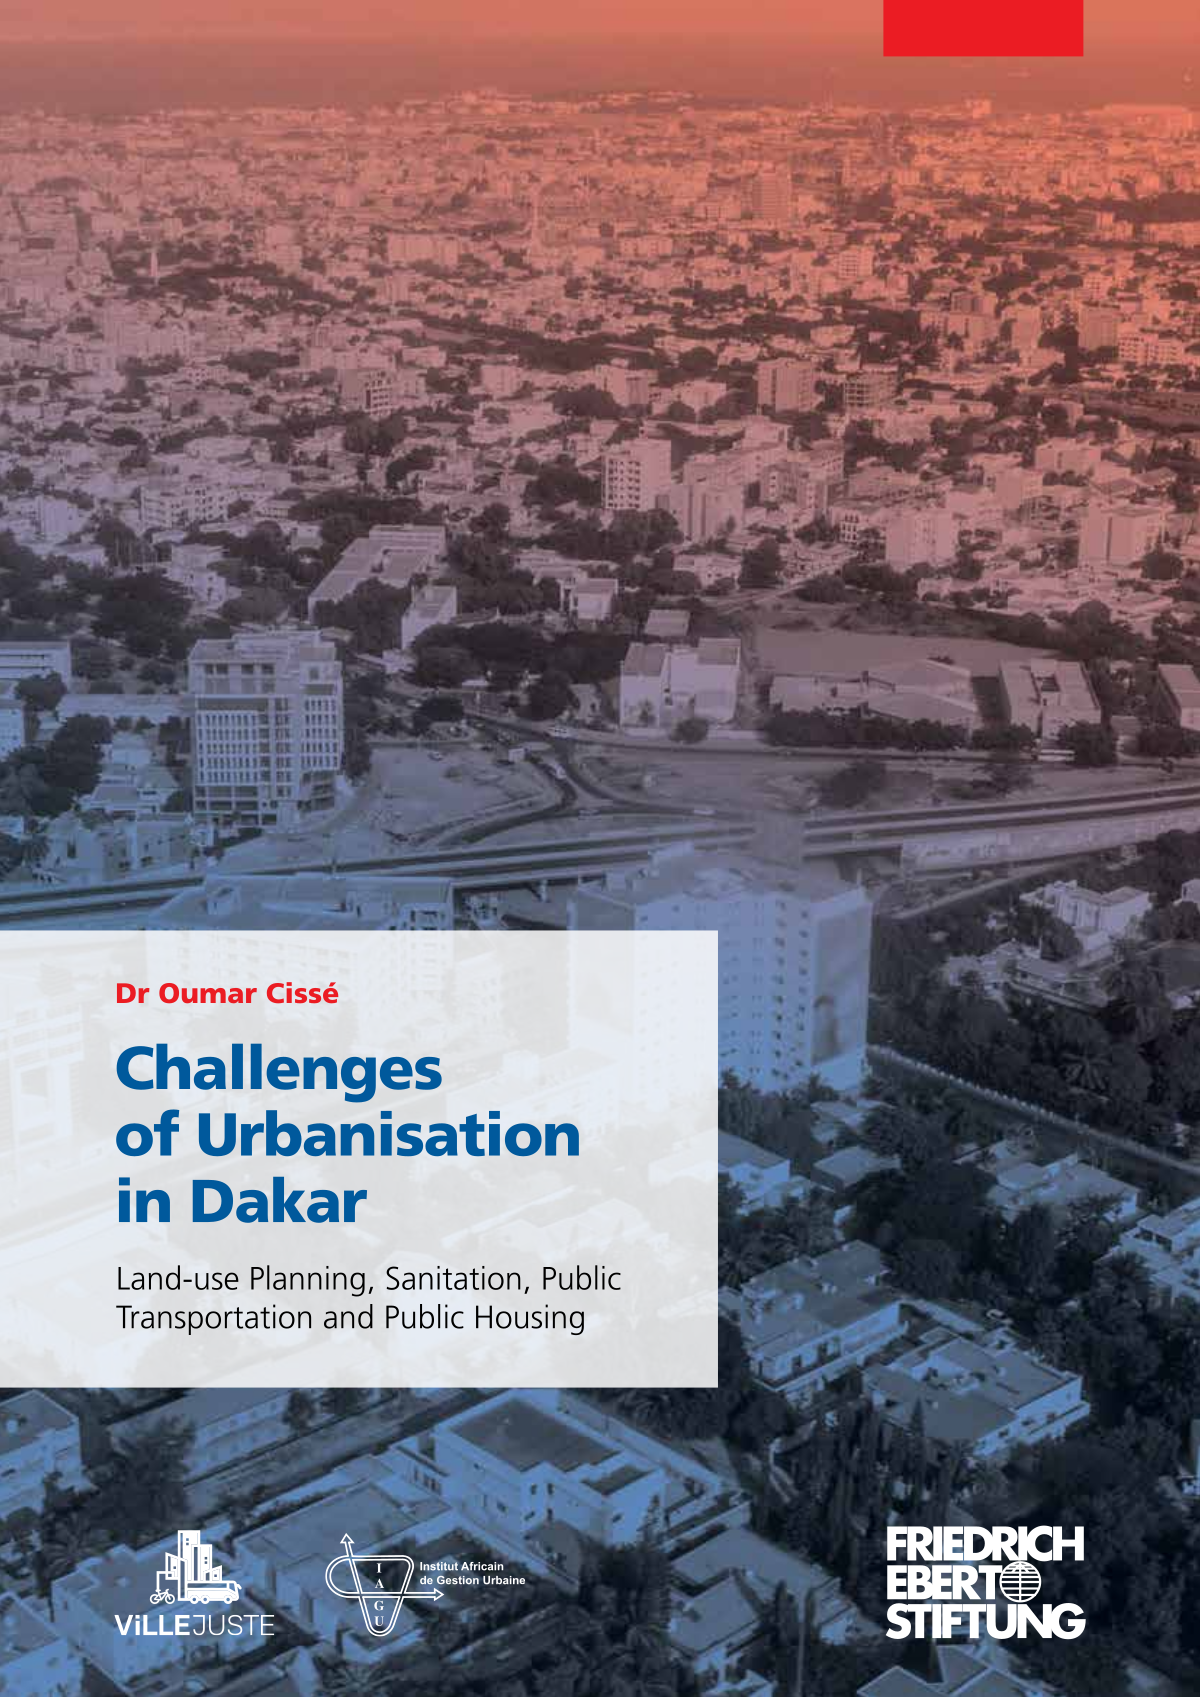 Book cover of "Challenges of urbanisation in dhakar"